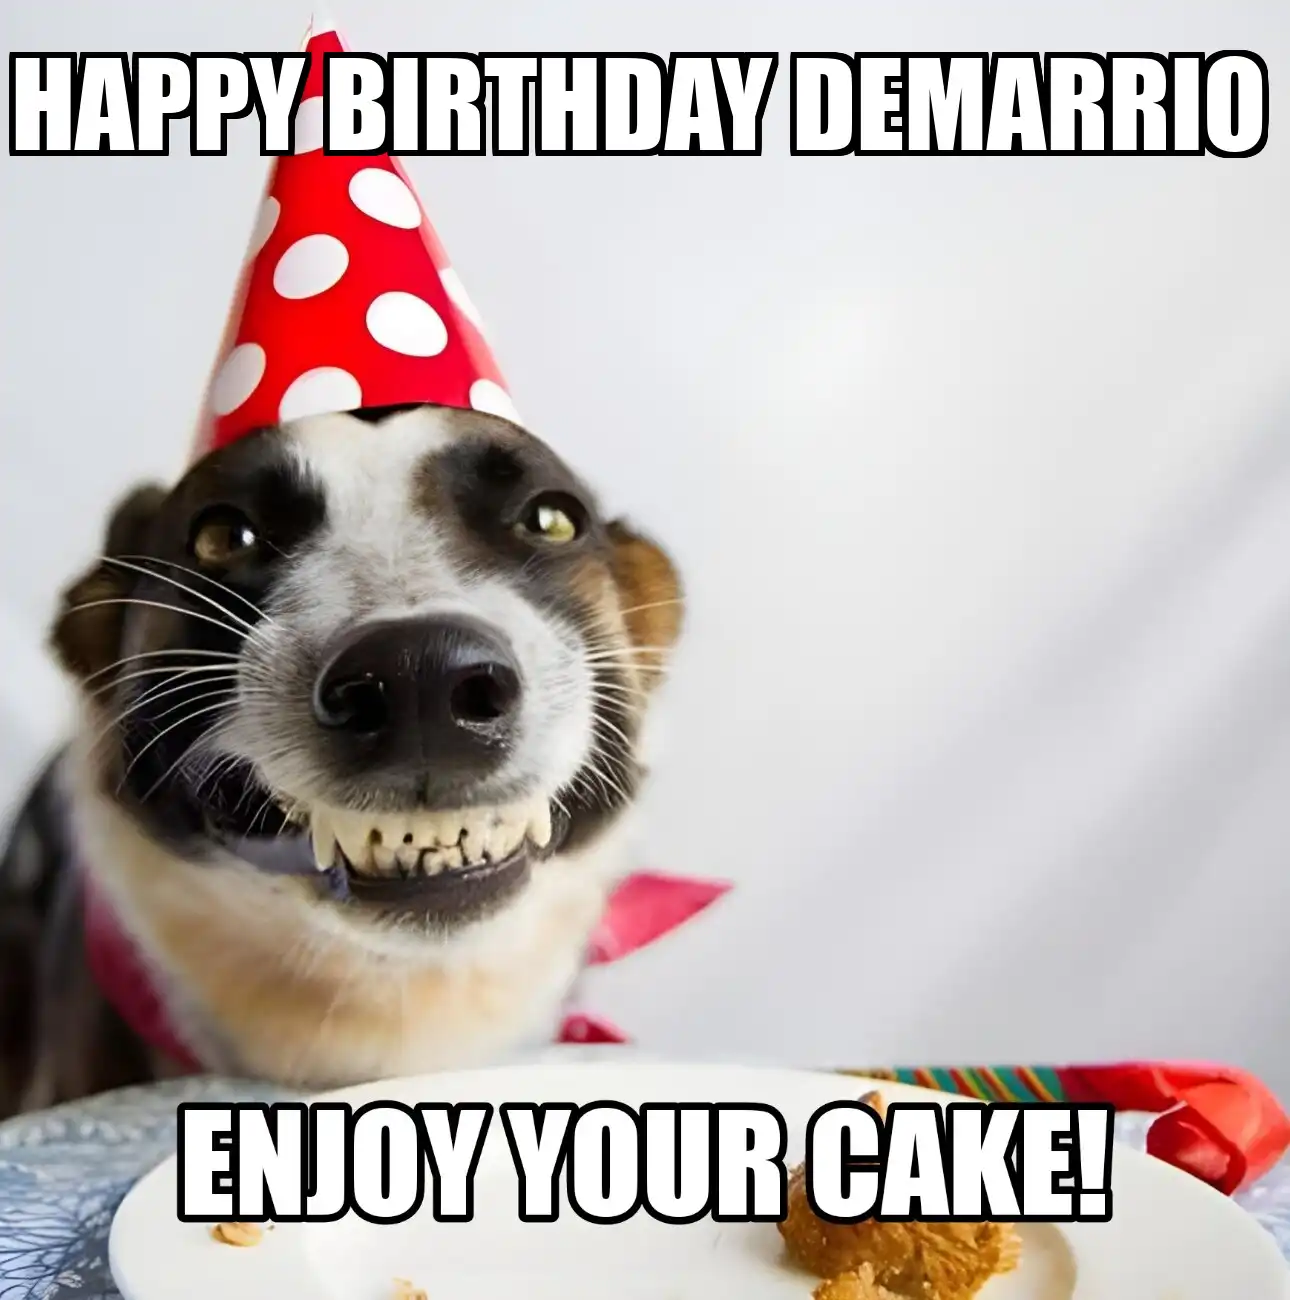 Happy Birthday Demarrio Enjoy Your Cake Dog Meme